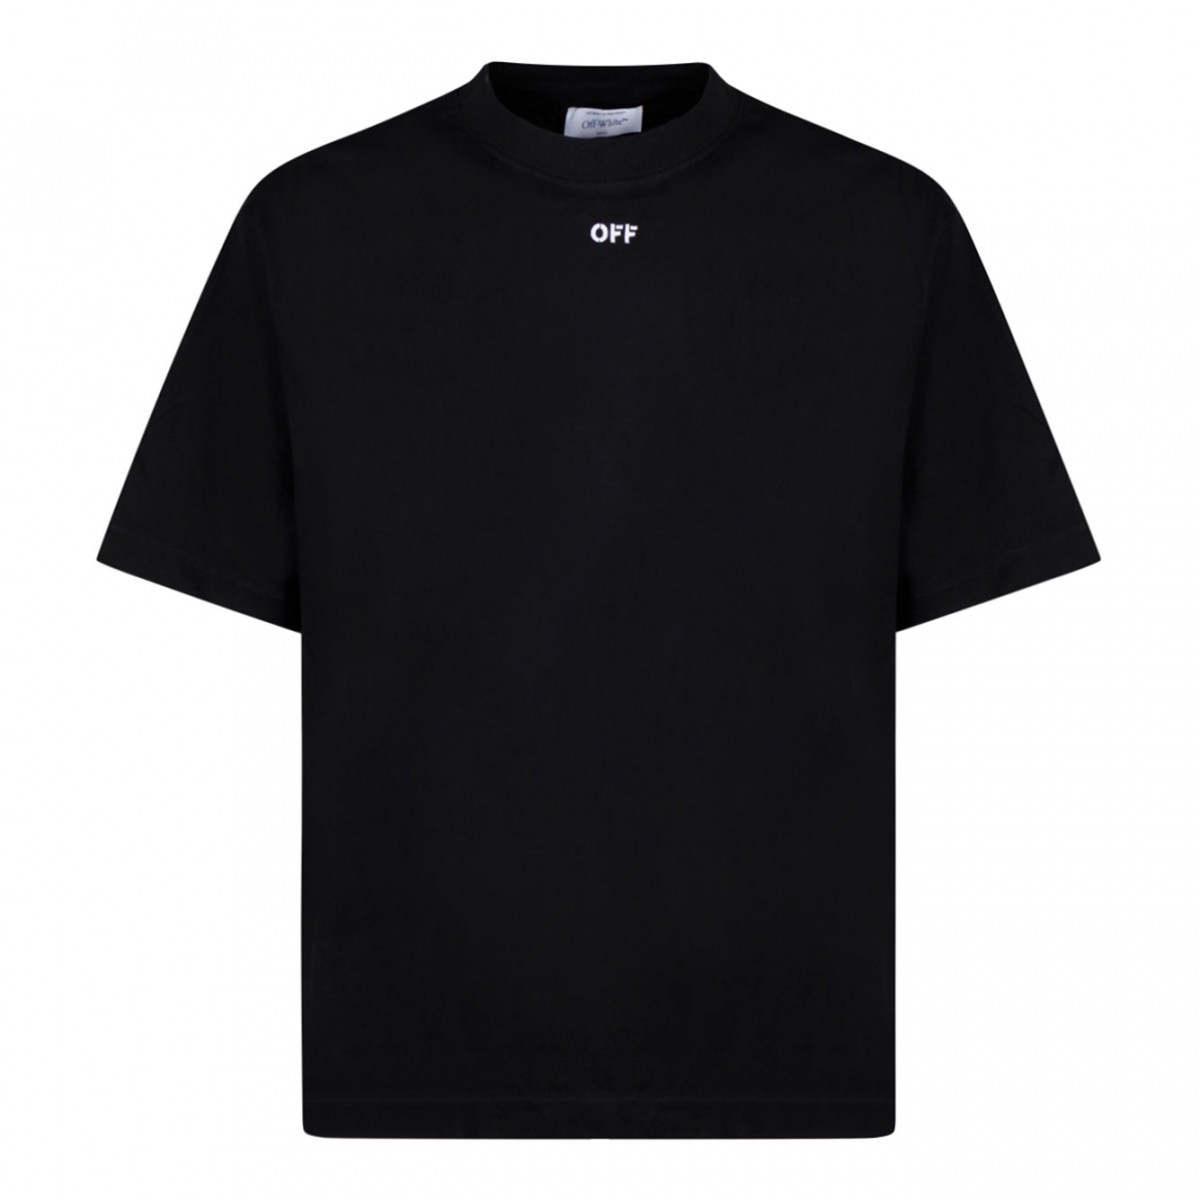 Black and White Arrows Motif T-Shirt